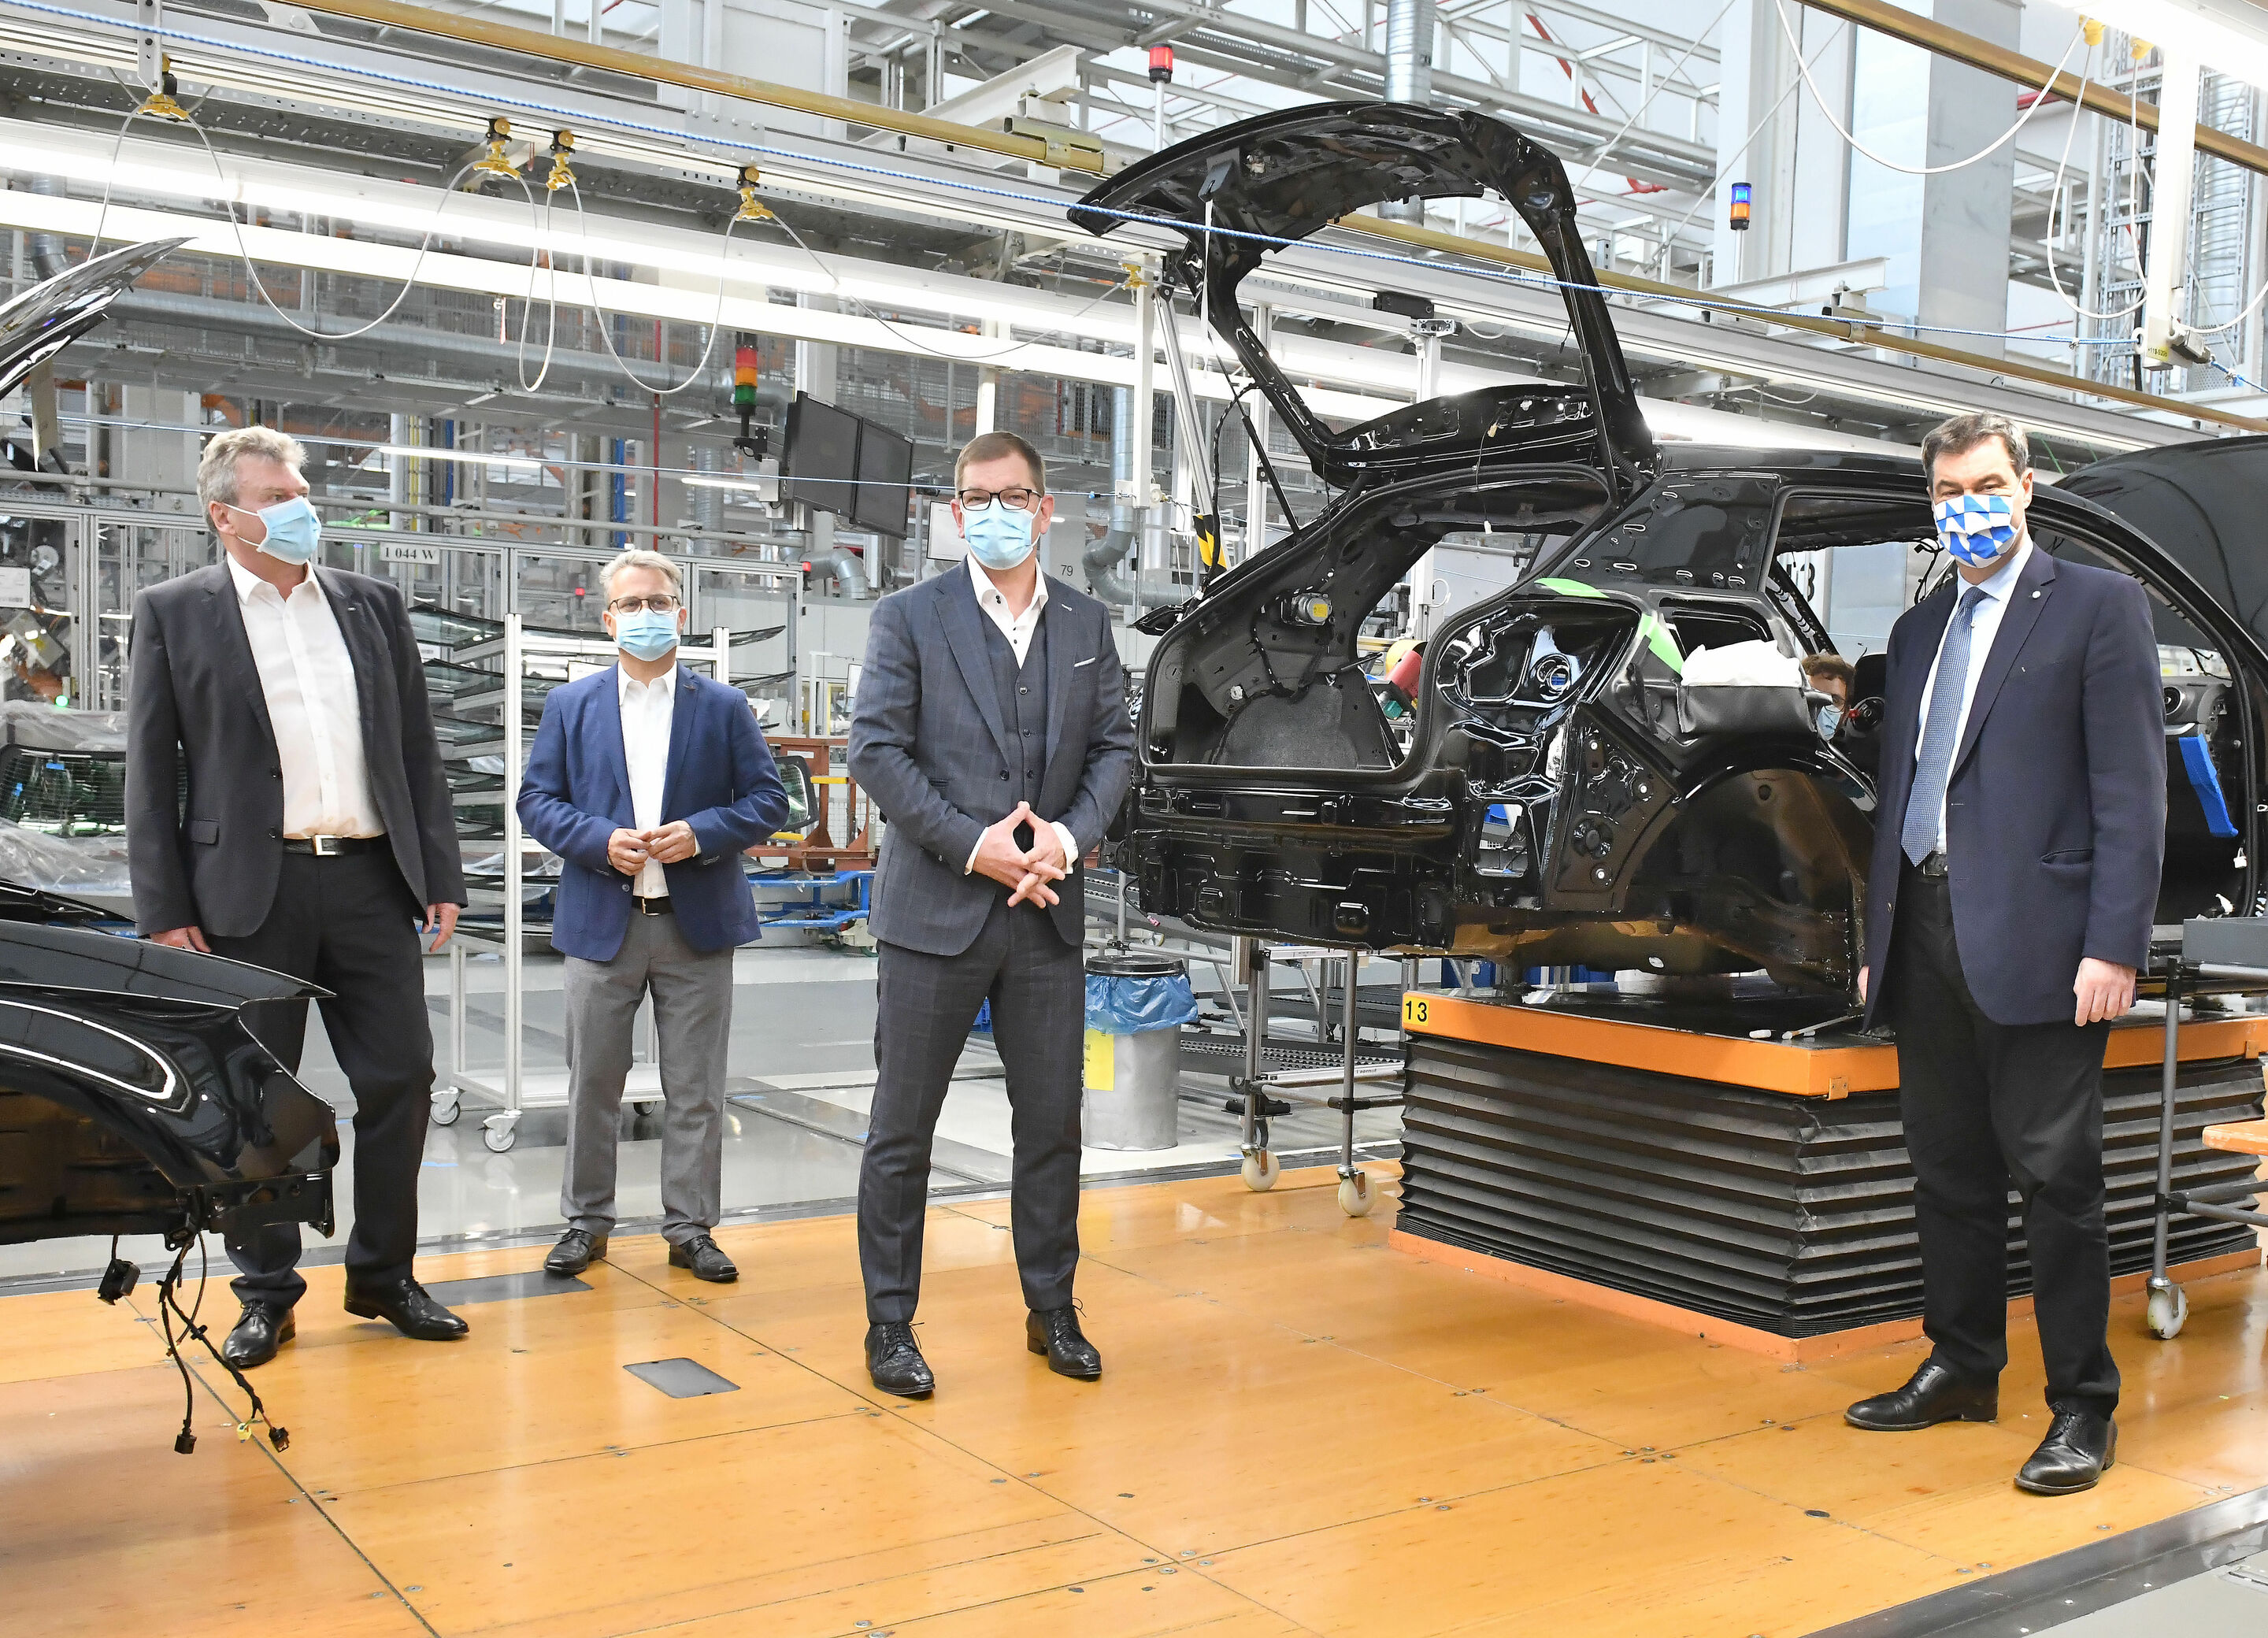 Markus Söder Visits Audi: Bavaria’s Minister President Impressed with Protective Measures